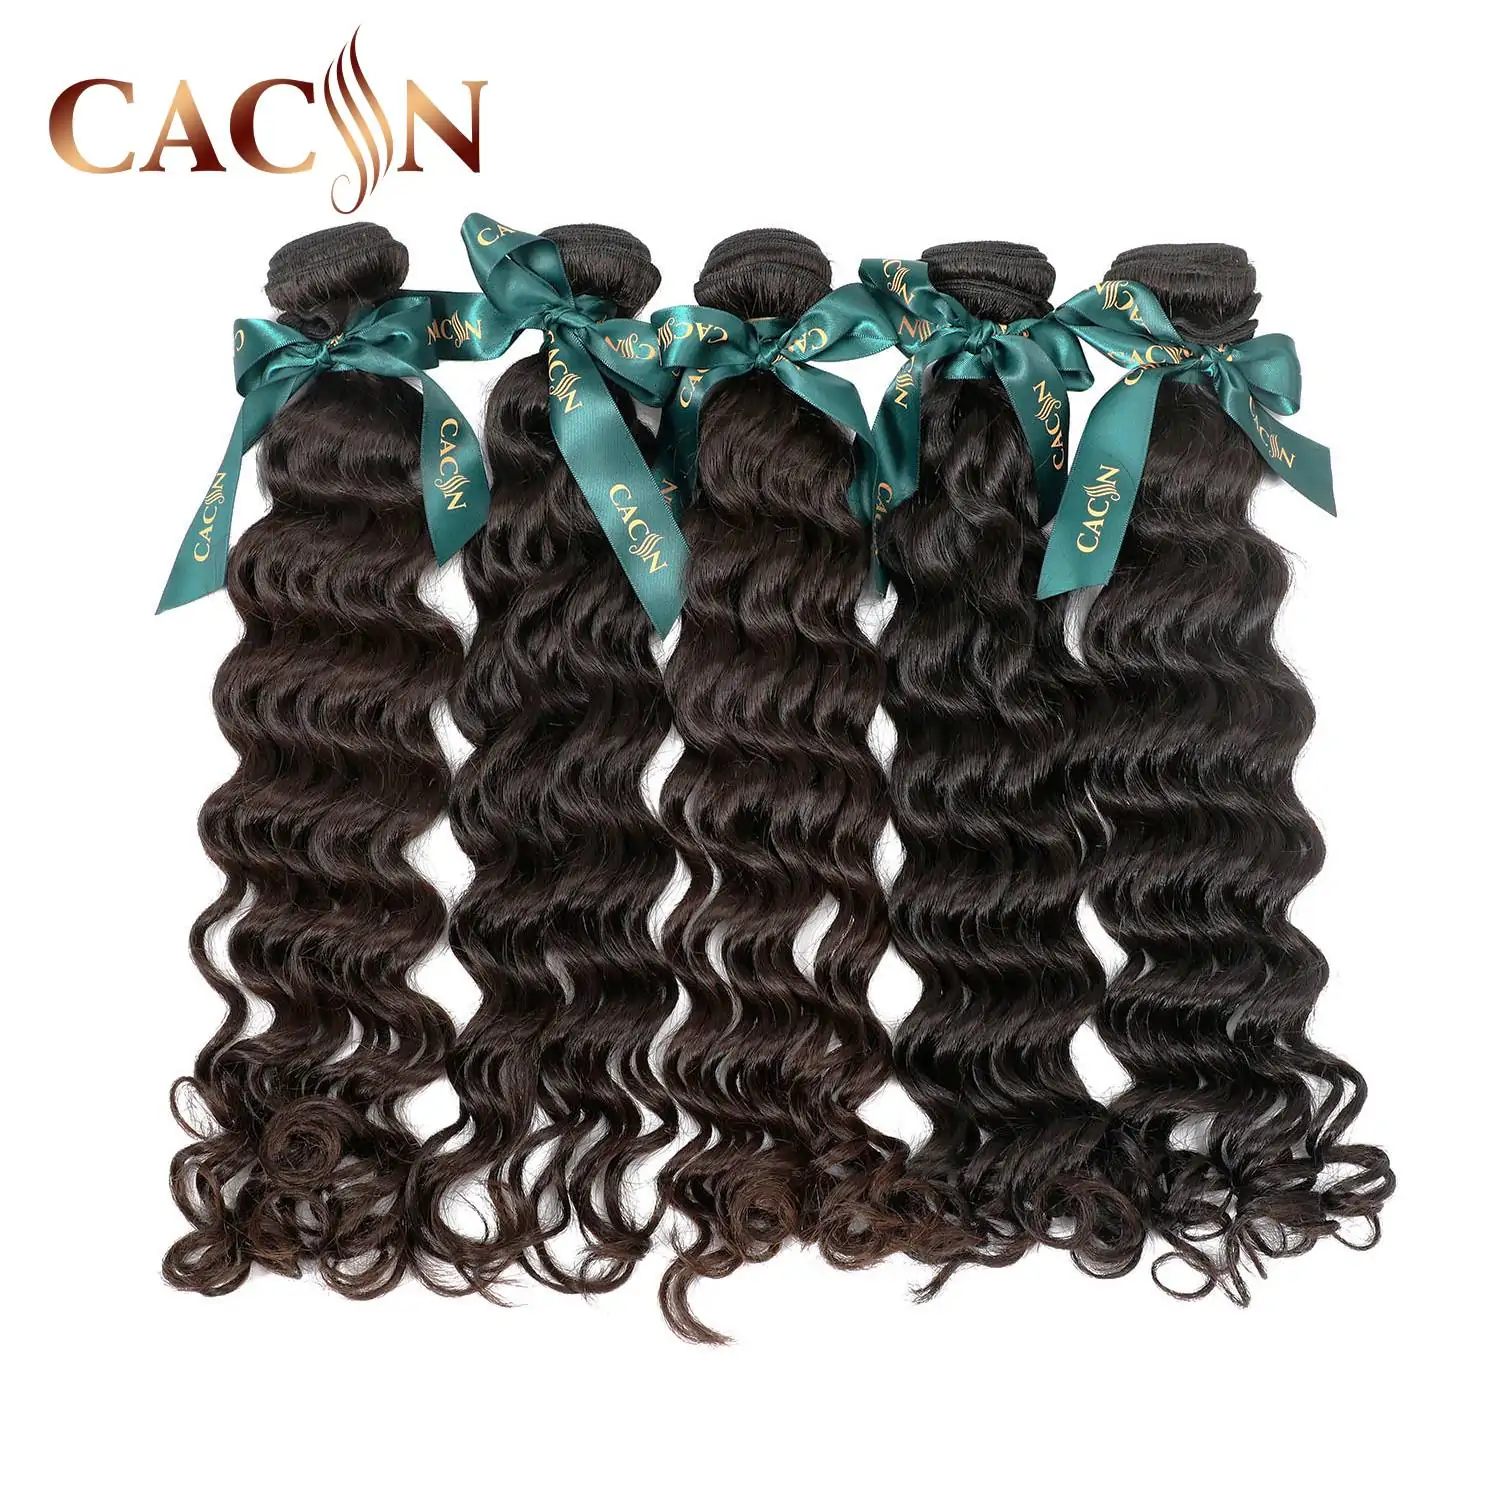 Raw virgin Peruvian hair bundles deep wave 1 bundle, hair bundles deals, free shipping